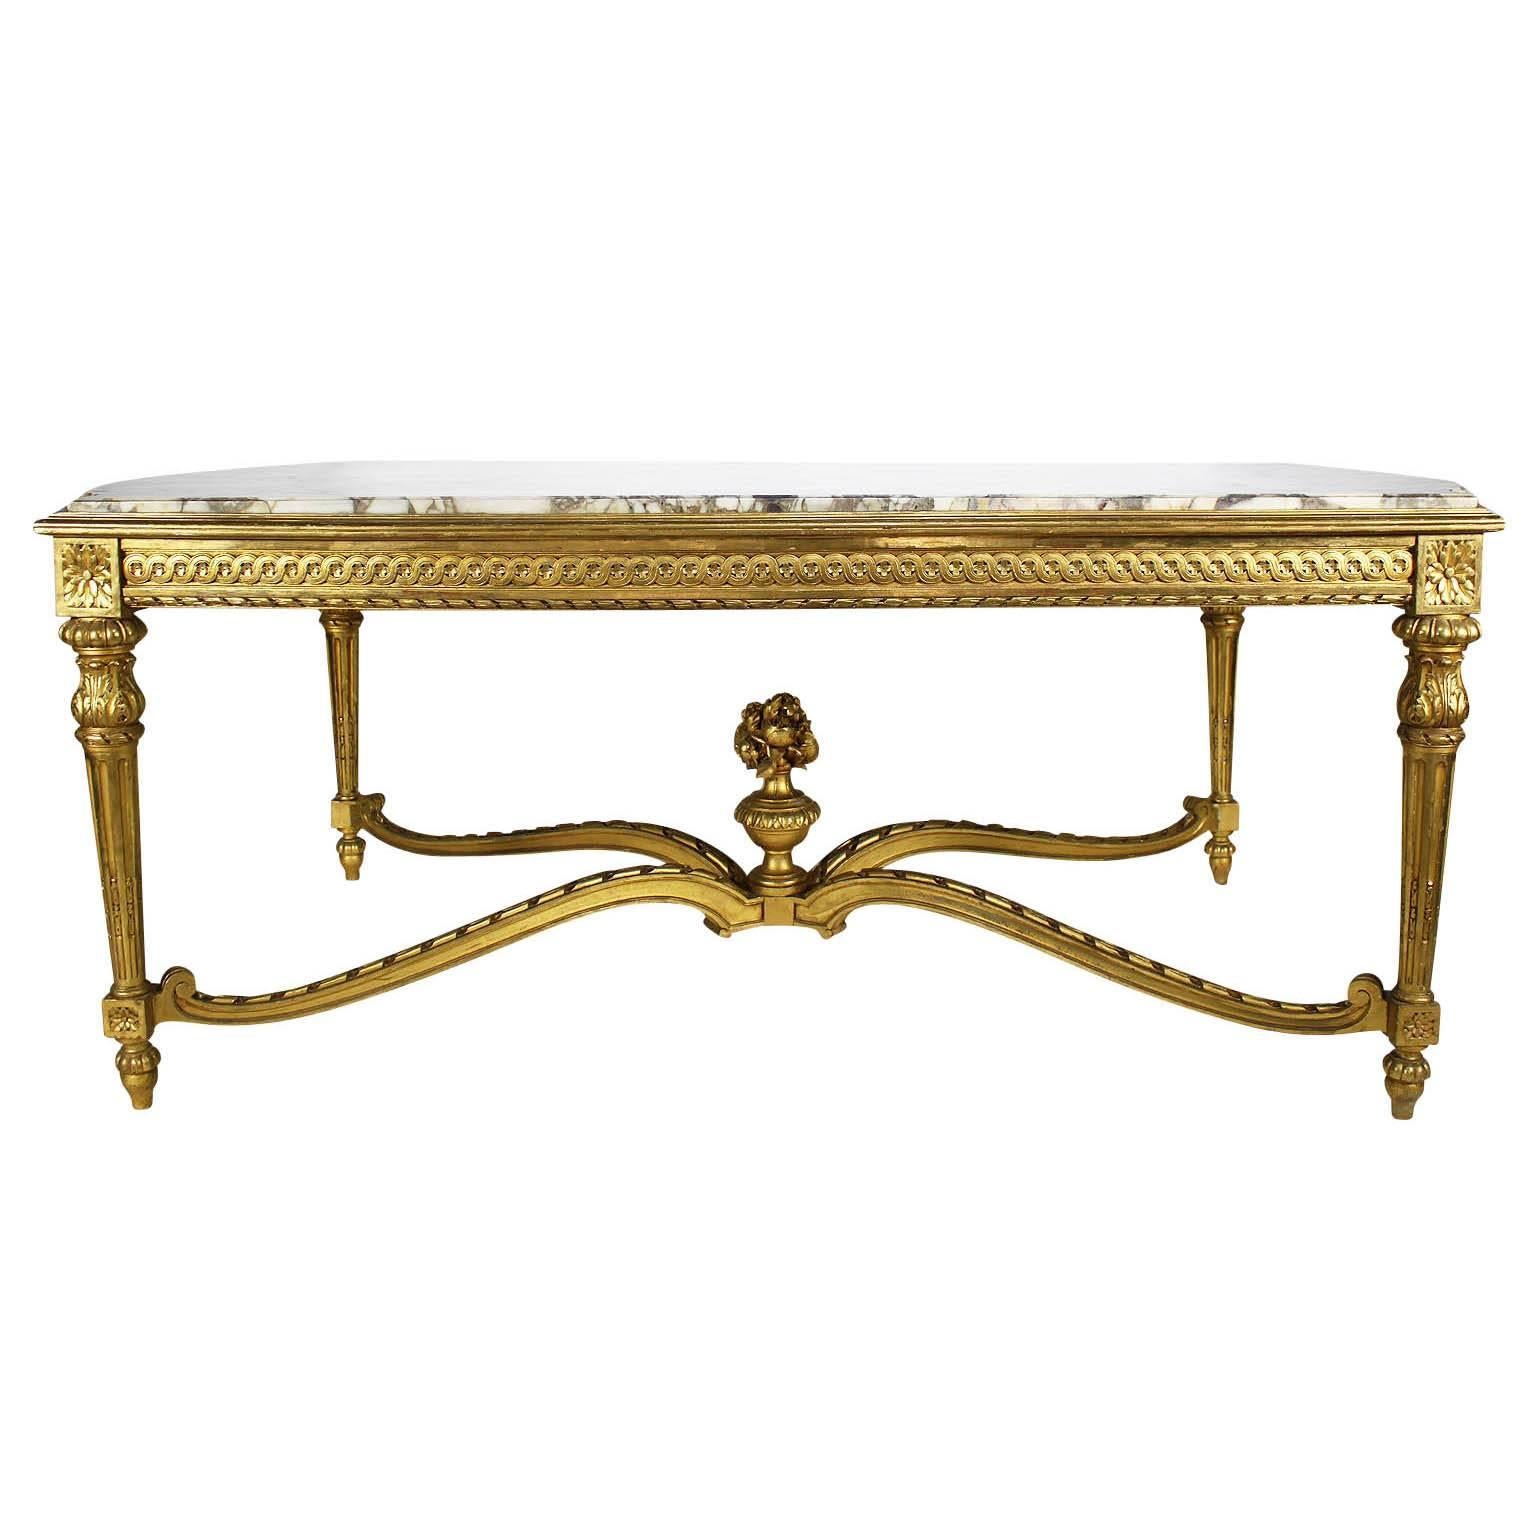 Gran mesa de salón central tallada en madera dorada estilo Luis XVI francés del siglo XIX